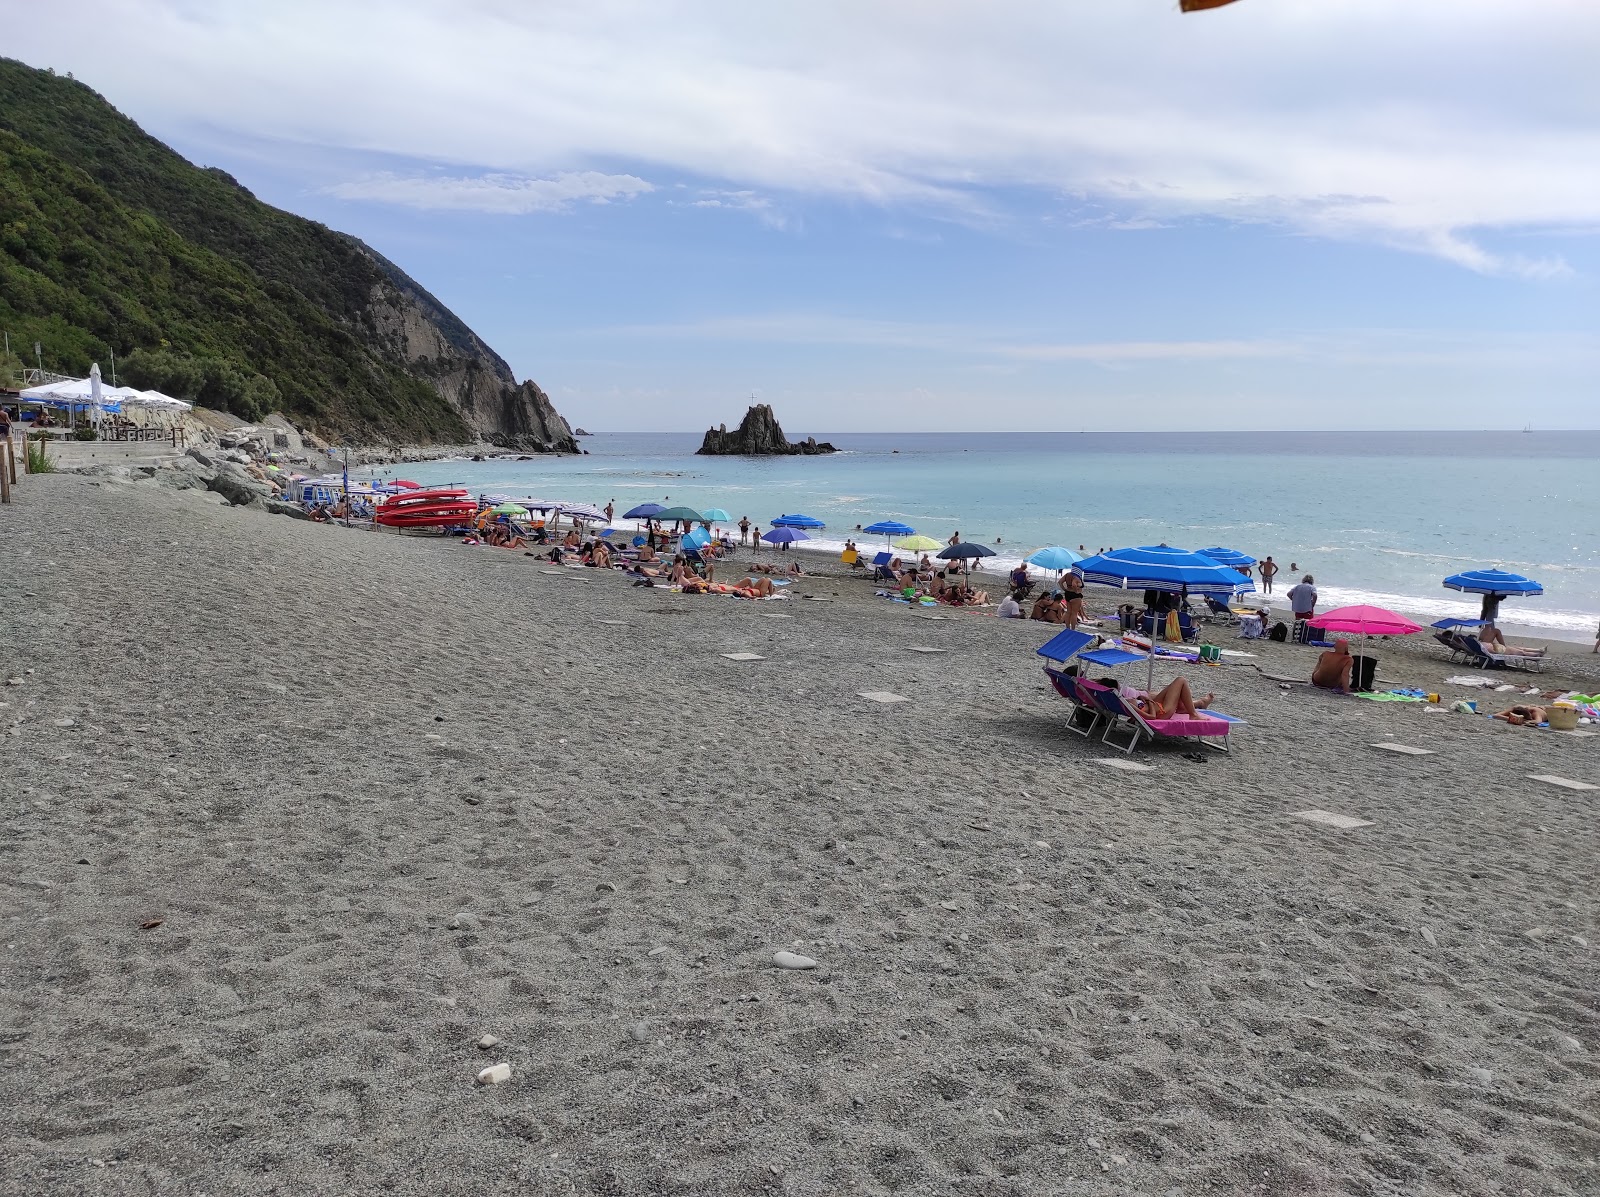 Foto av Spiaggia Riva Trigoso med rak strand